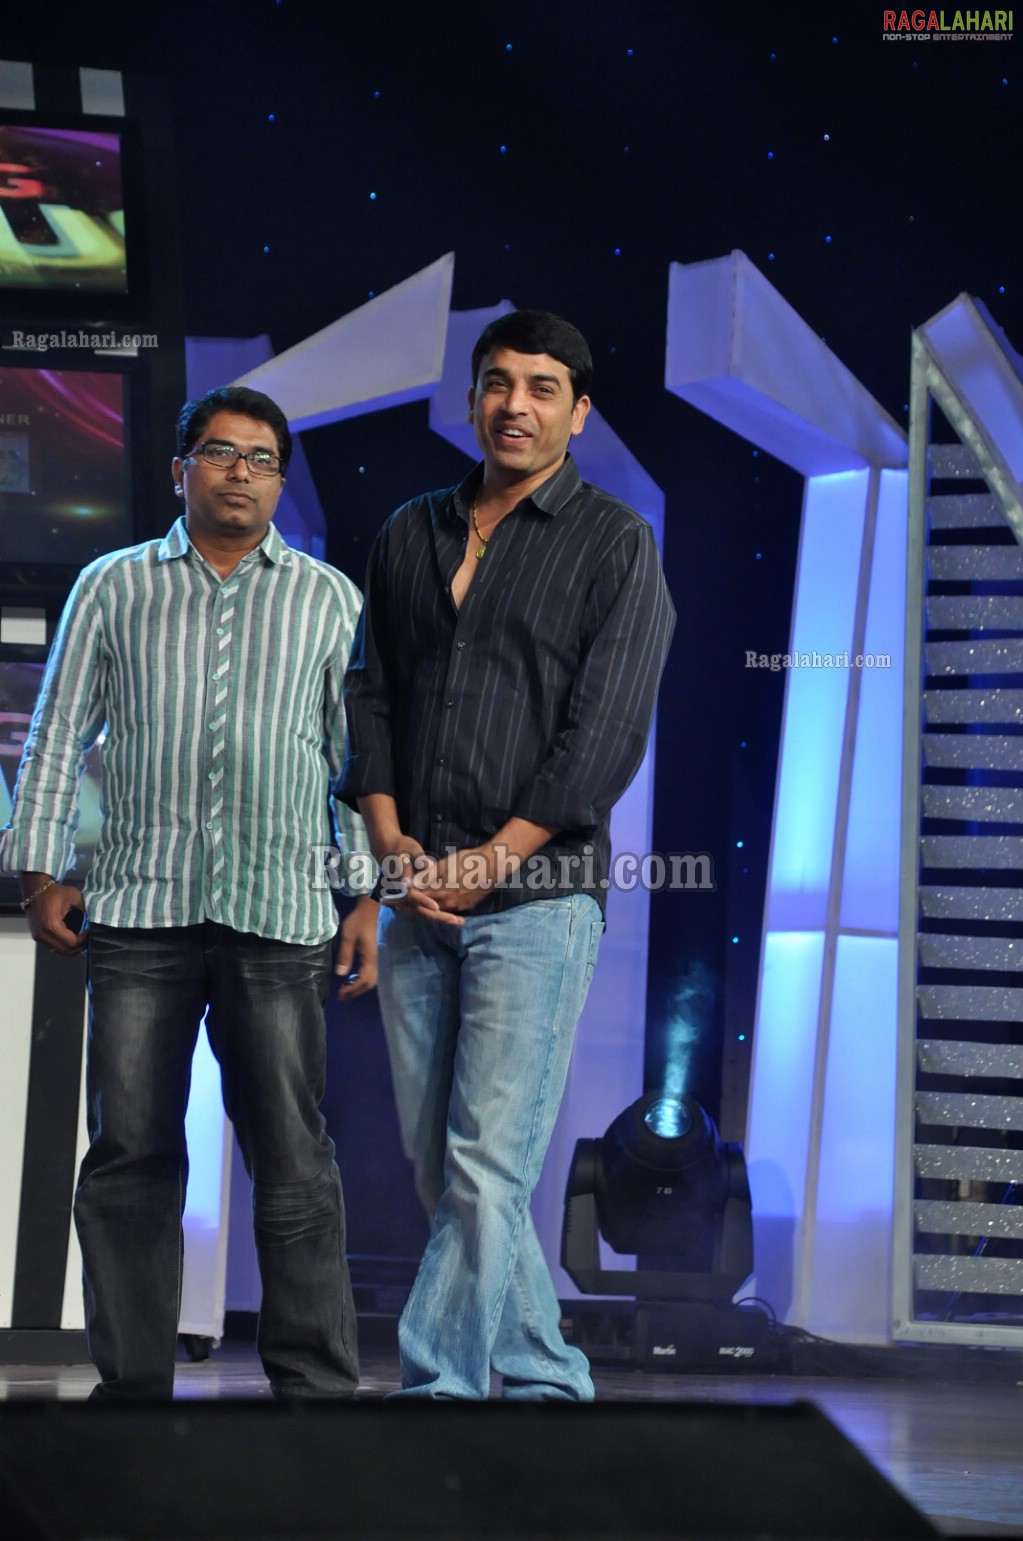 Big FM Telugu Movie Awards 2011